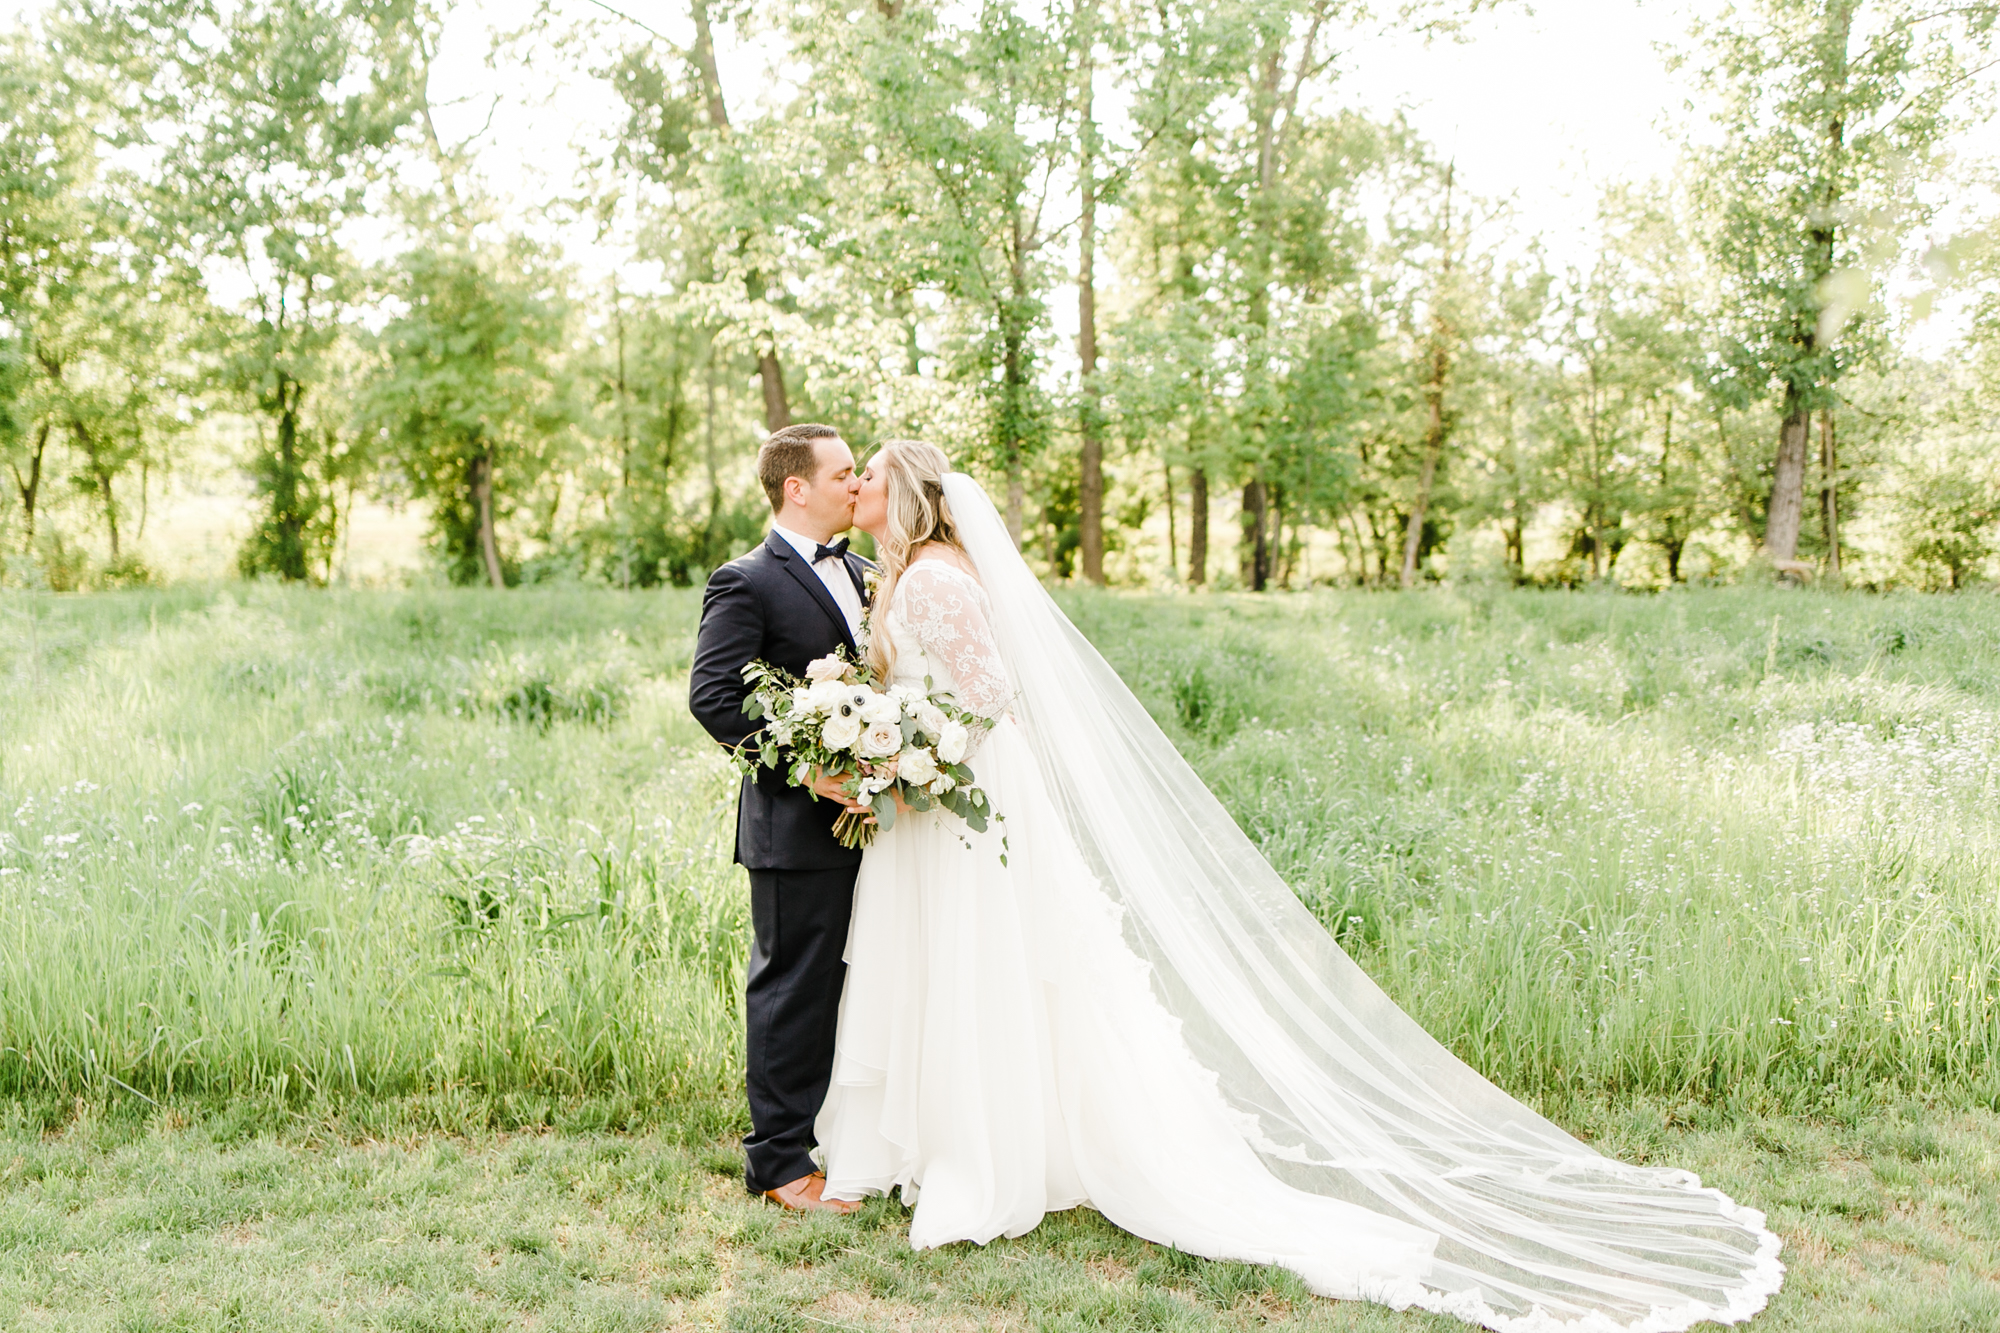 Asymmetrical, airy bridal bouquet with anemones, spirea, and garden roses // Nashville Wedding Floral Design